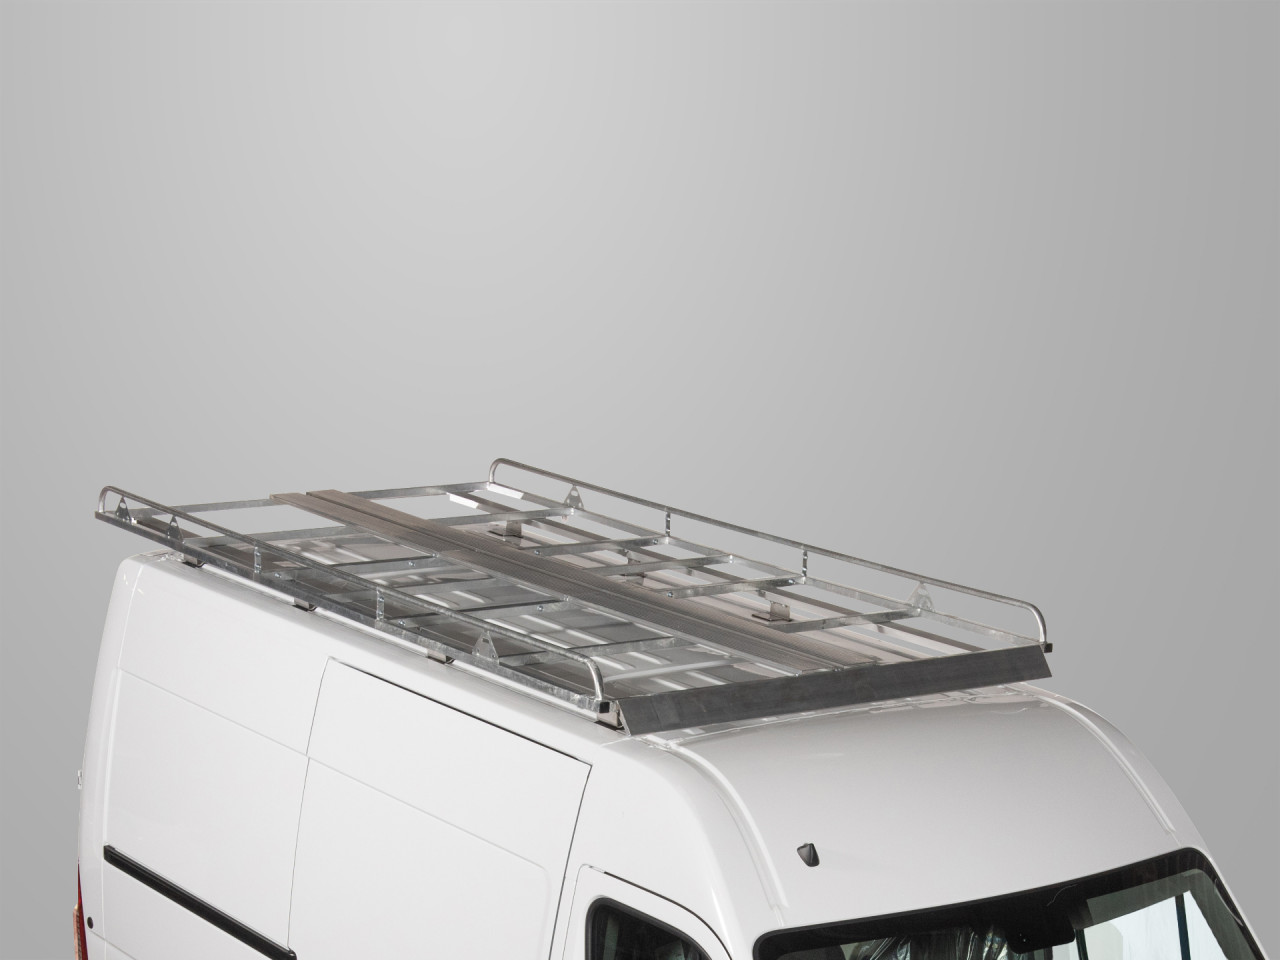 4 barres de toit aluminium MAN TGE - Galerie Auto Direct